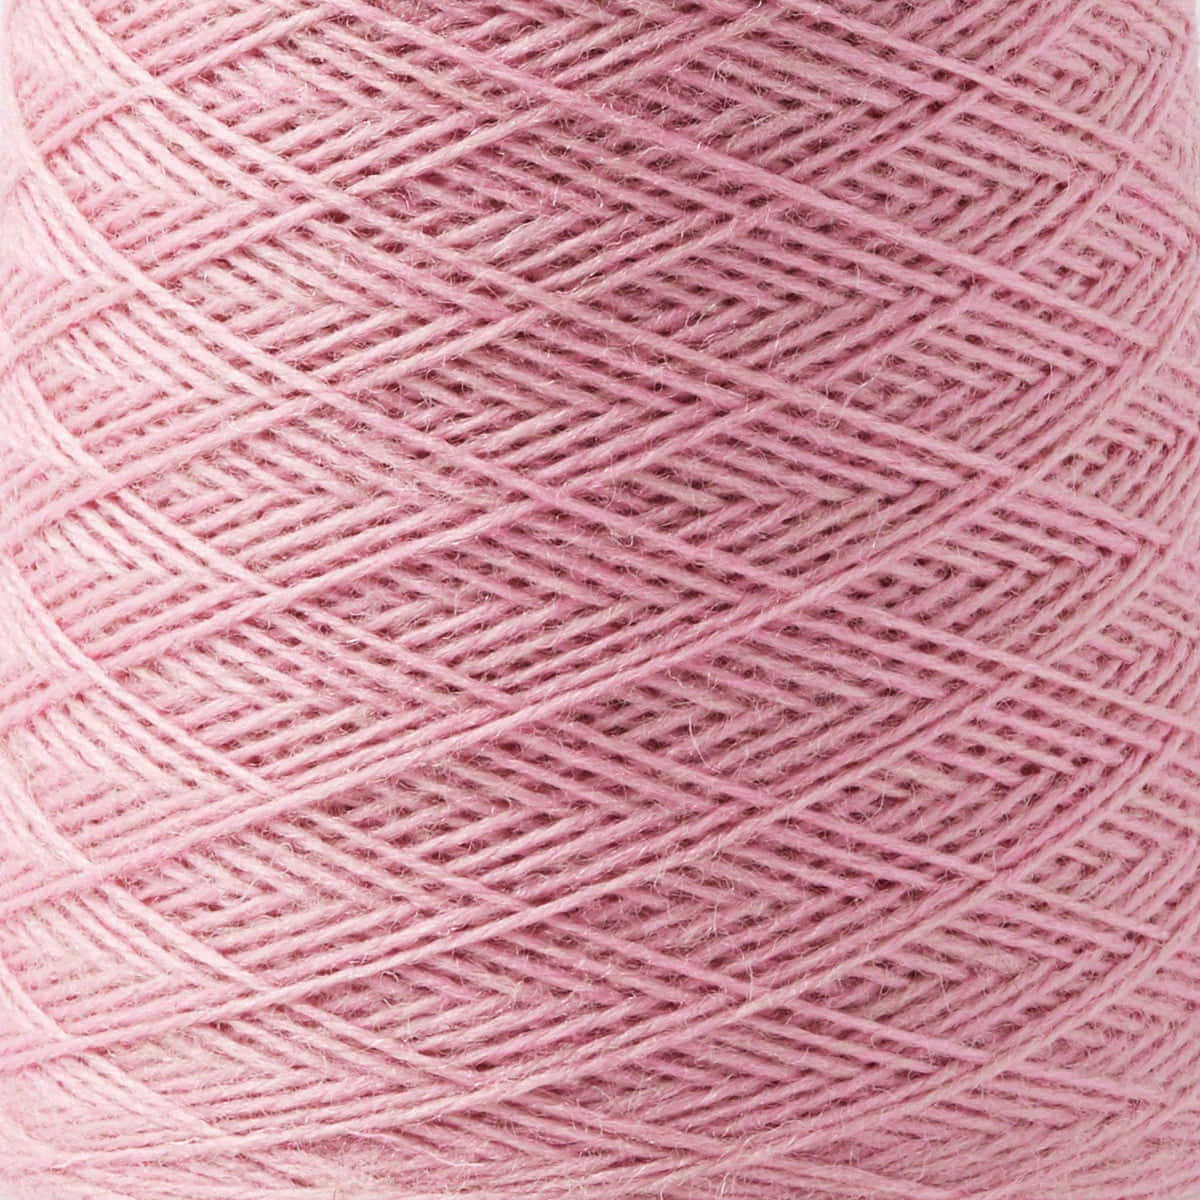 Pink Yarn Closeup Texture Wallpaper